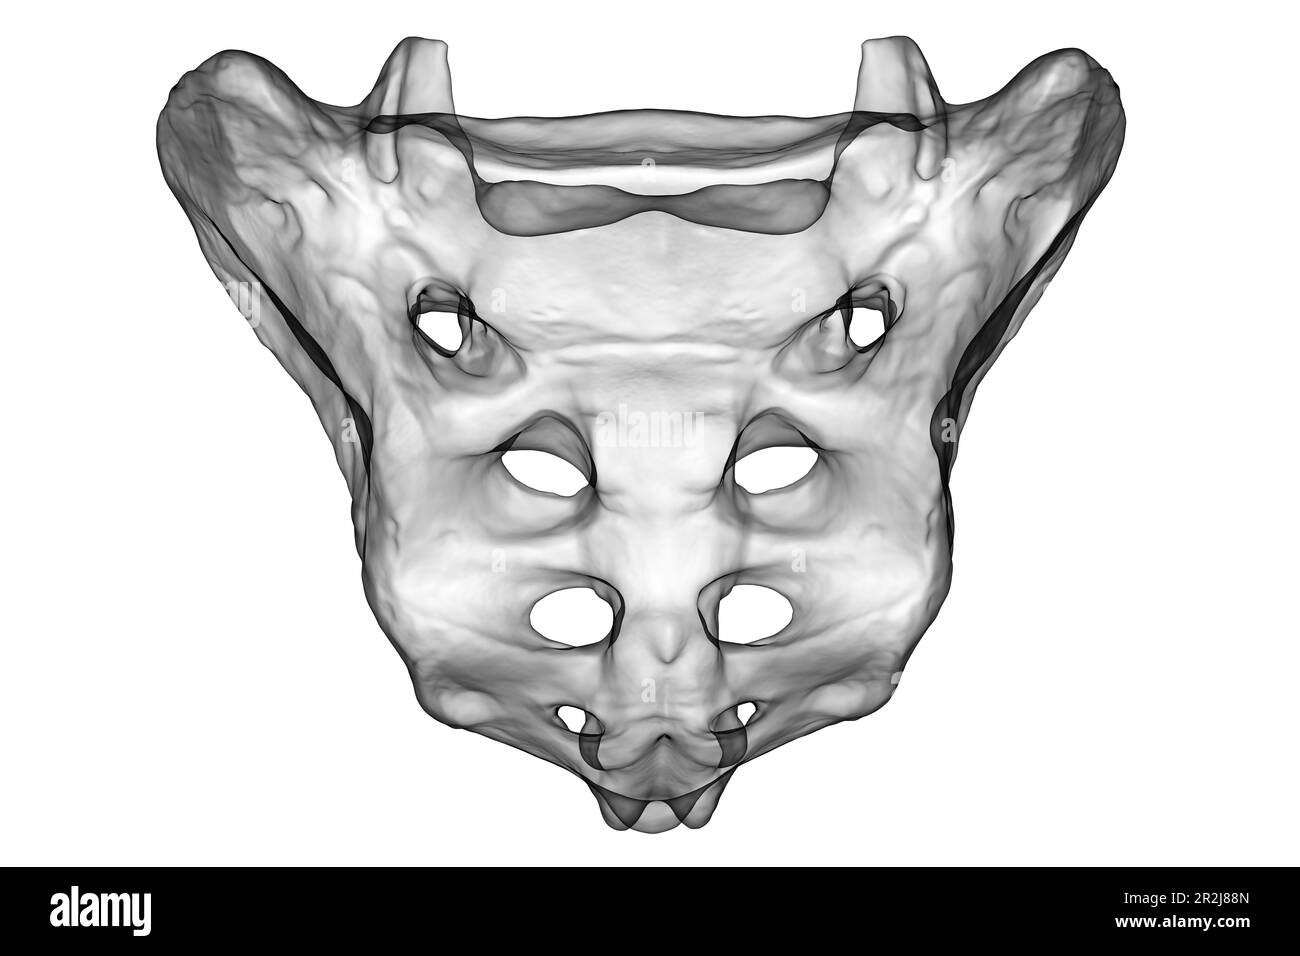 Sacrum bone, illustration Stock Photo